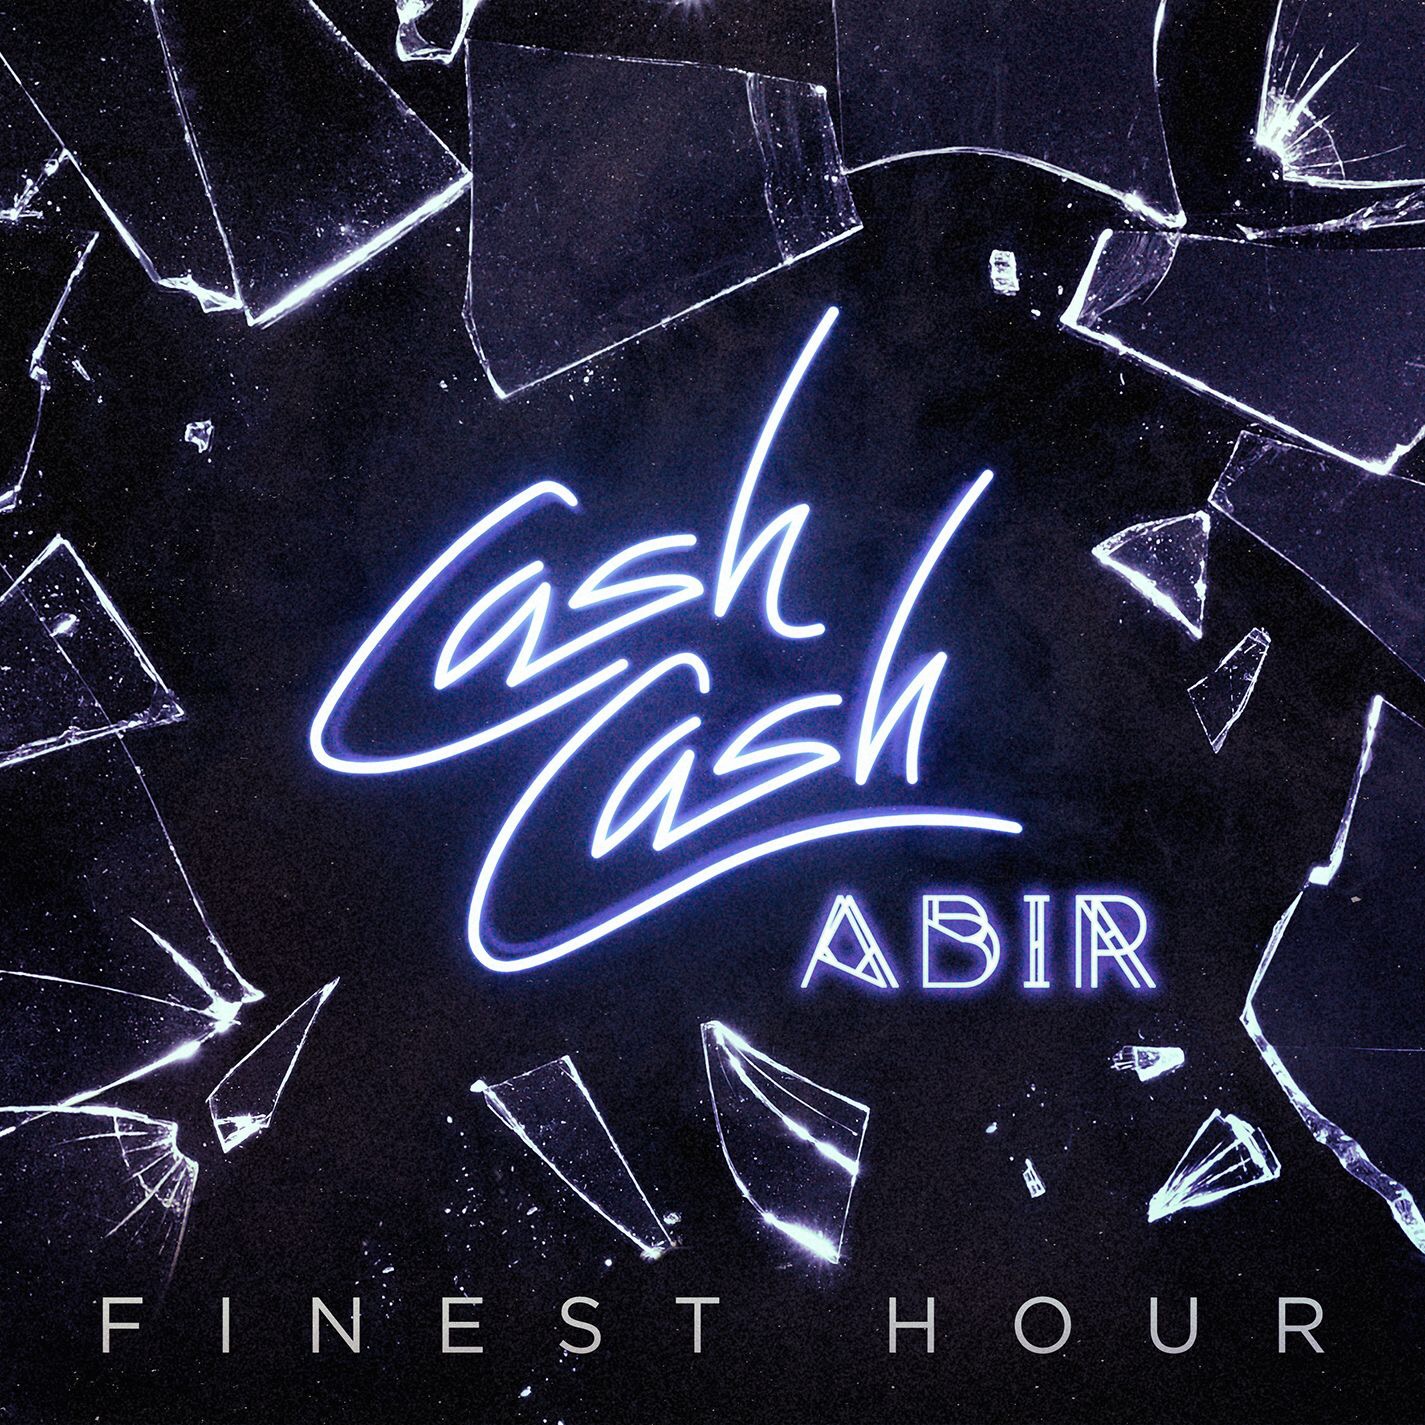 Finest Hour(Cash Cash/ABIR合作歌曲)